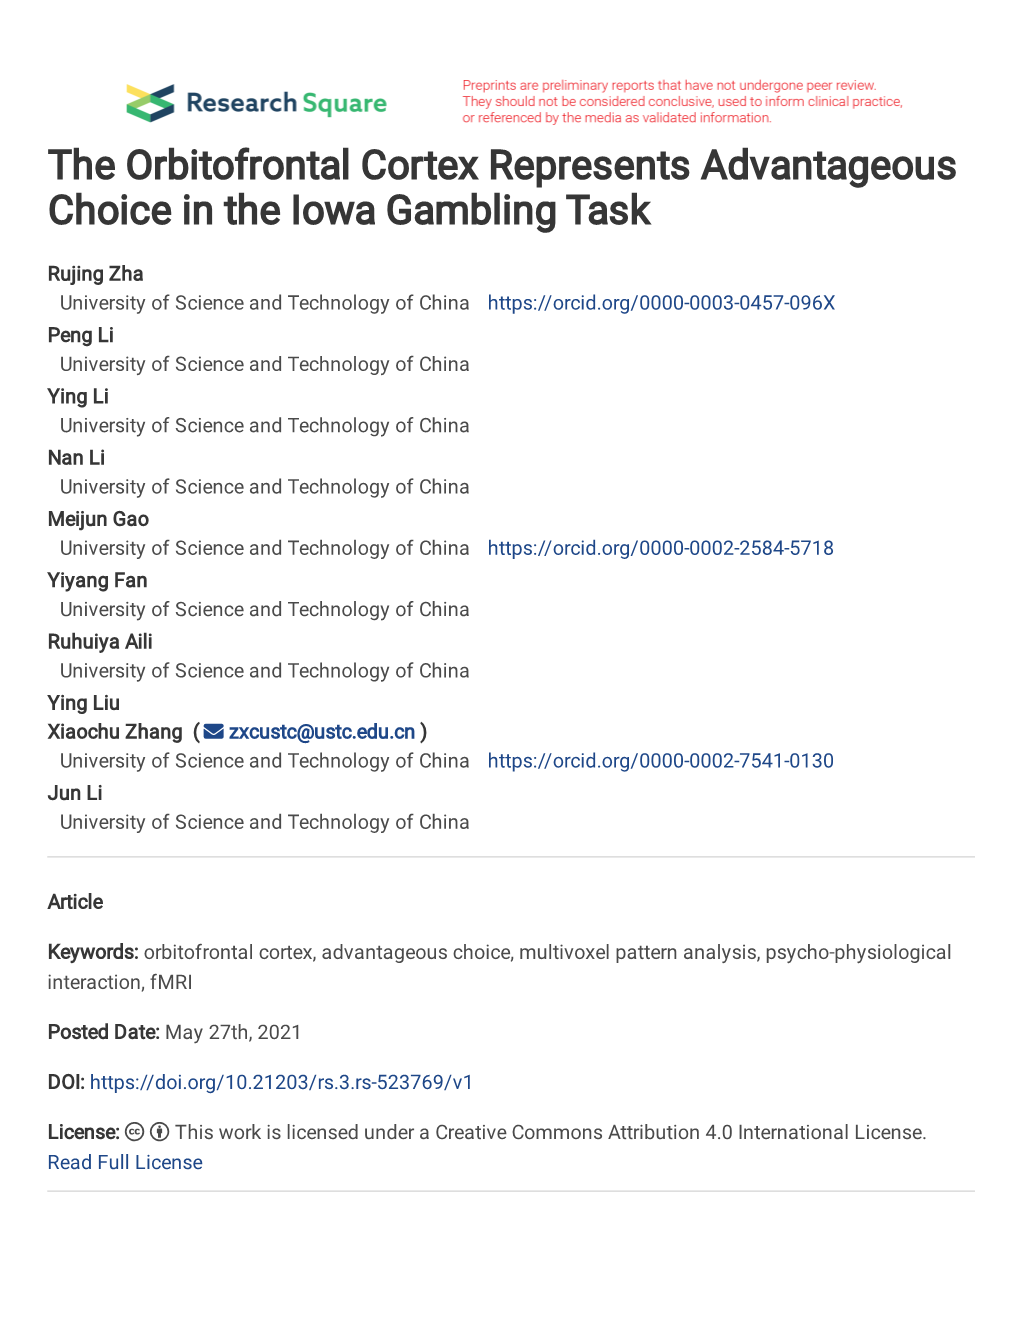 The Orbitofrontal Cortex Represents Advantageous Choice in the Iowa Gambling Task